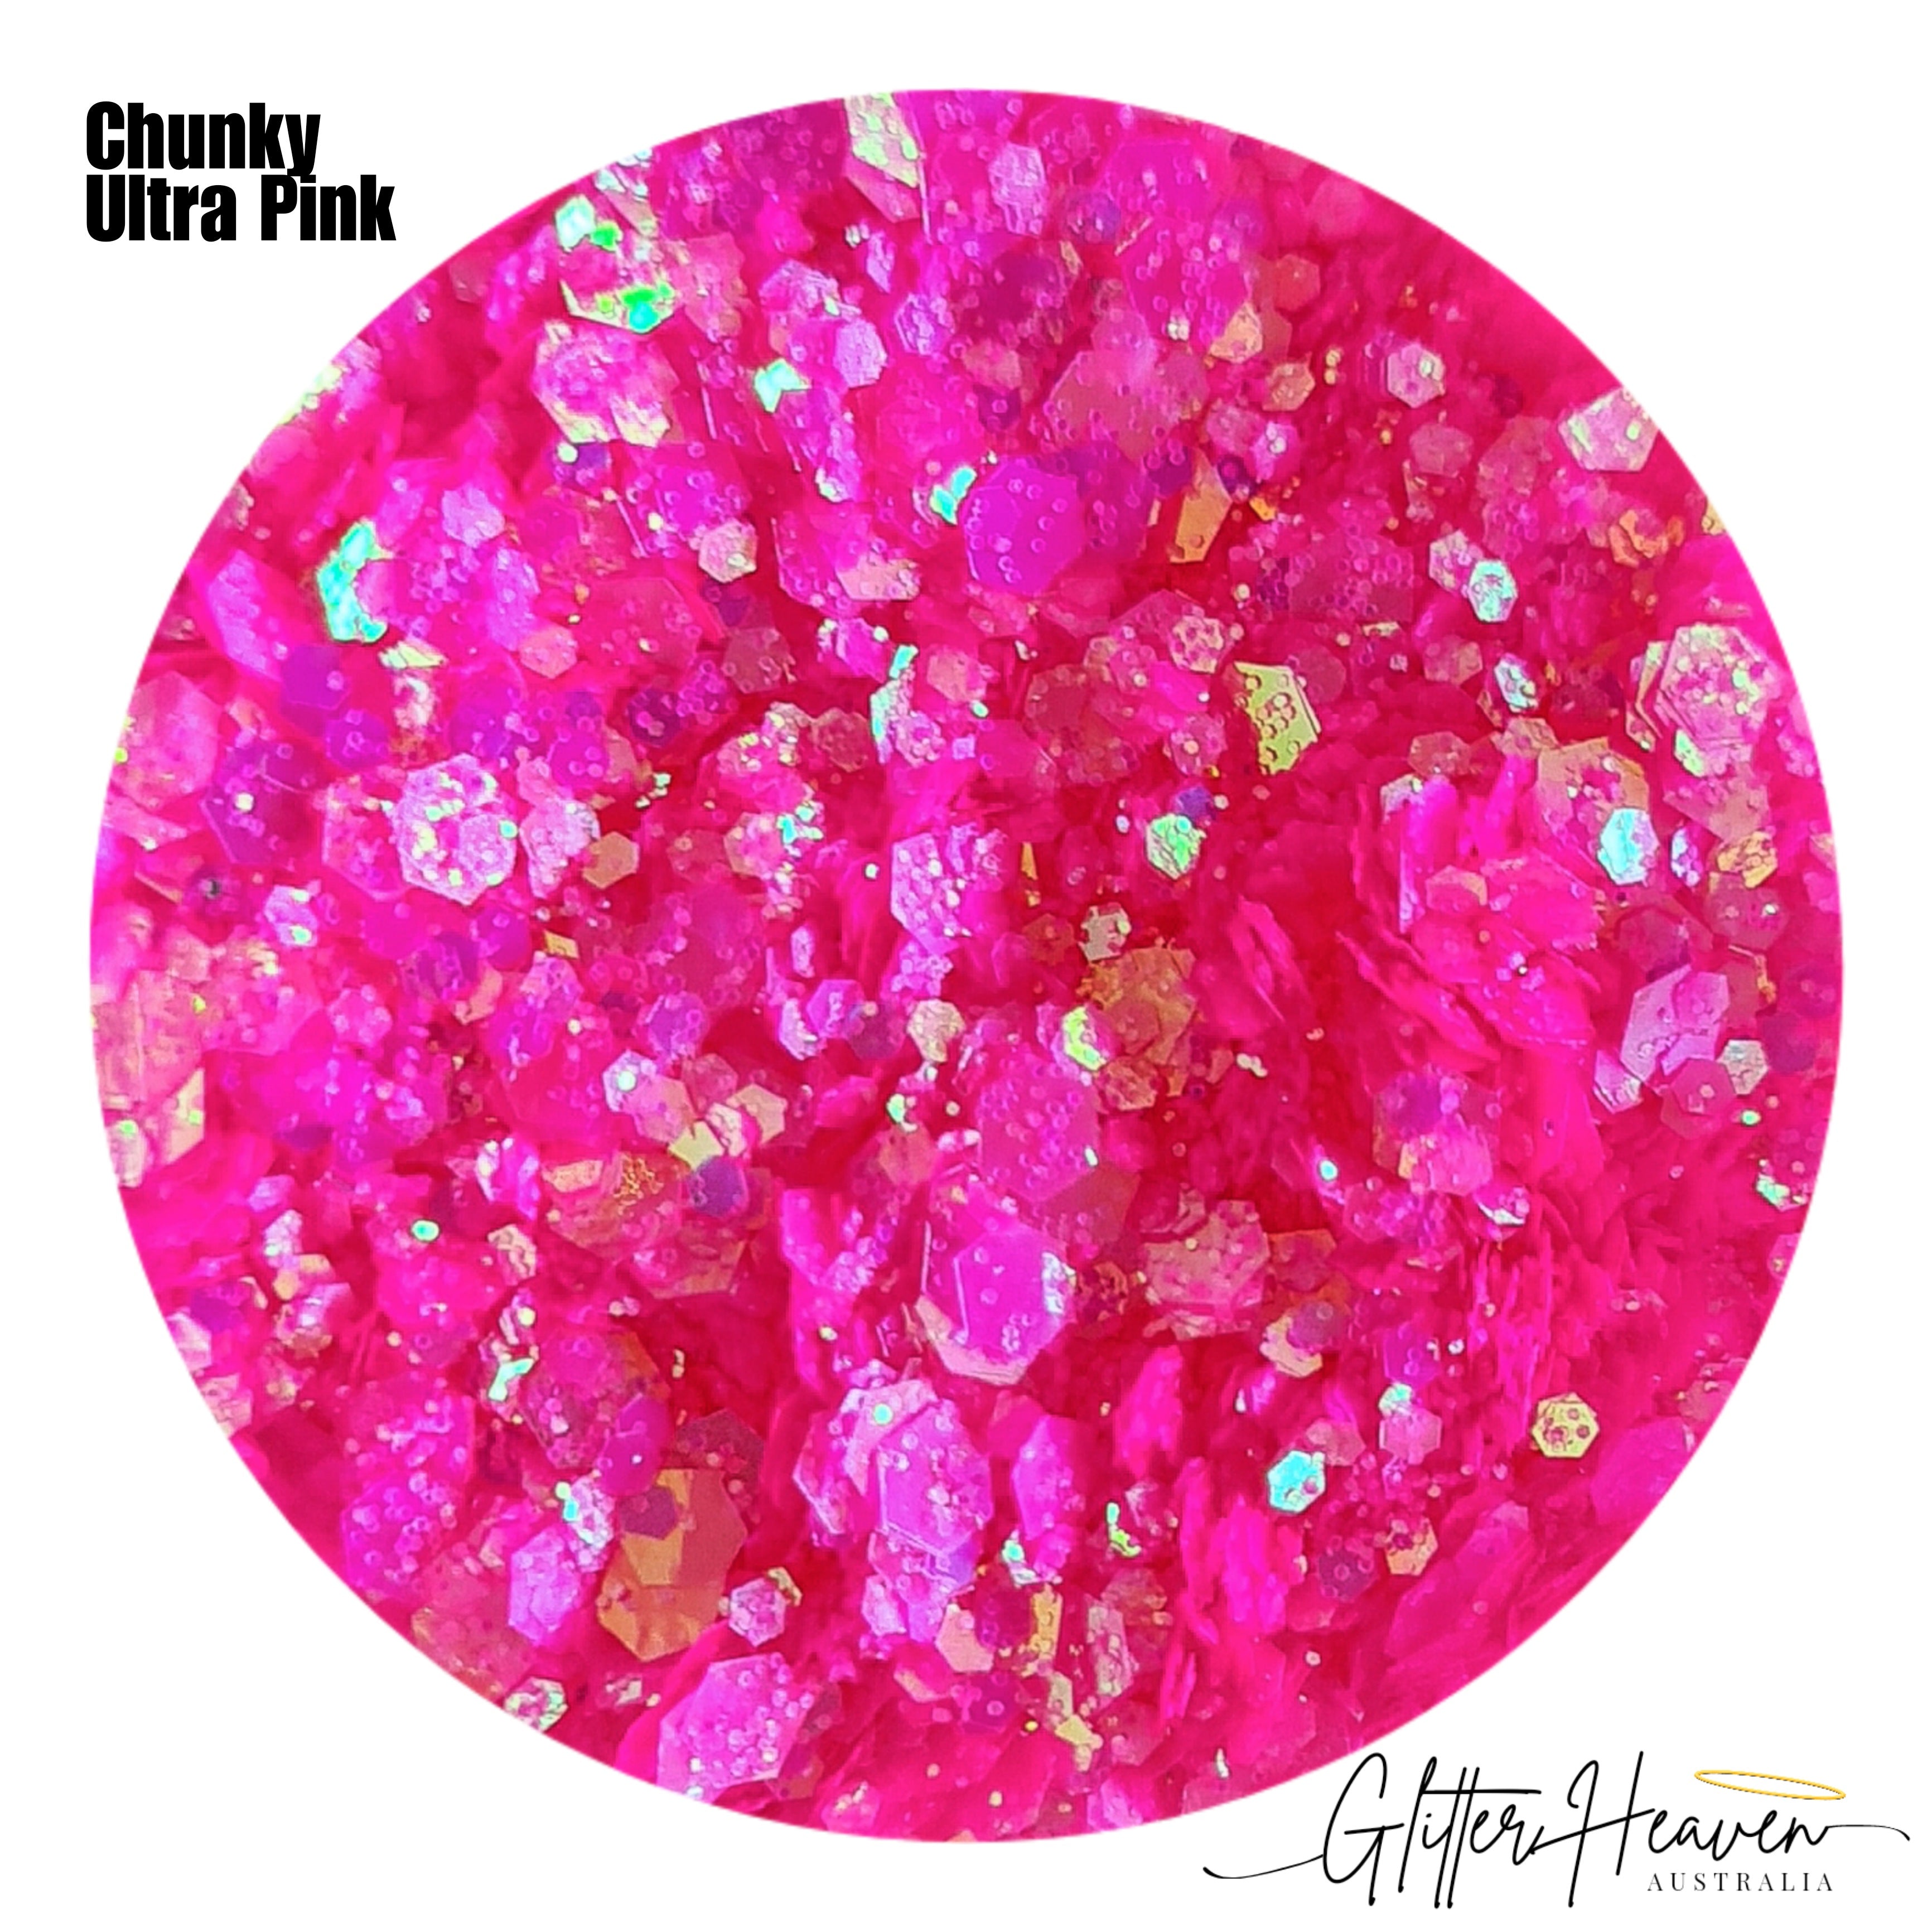 Chunky Ultra Pink